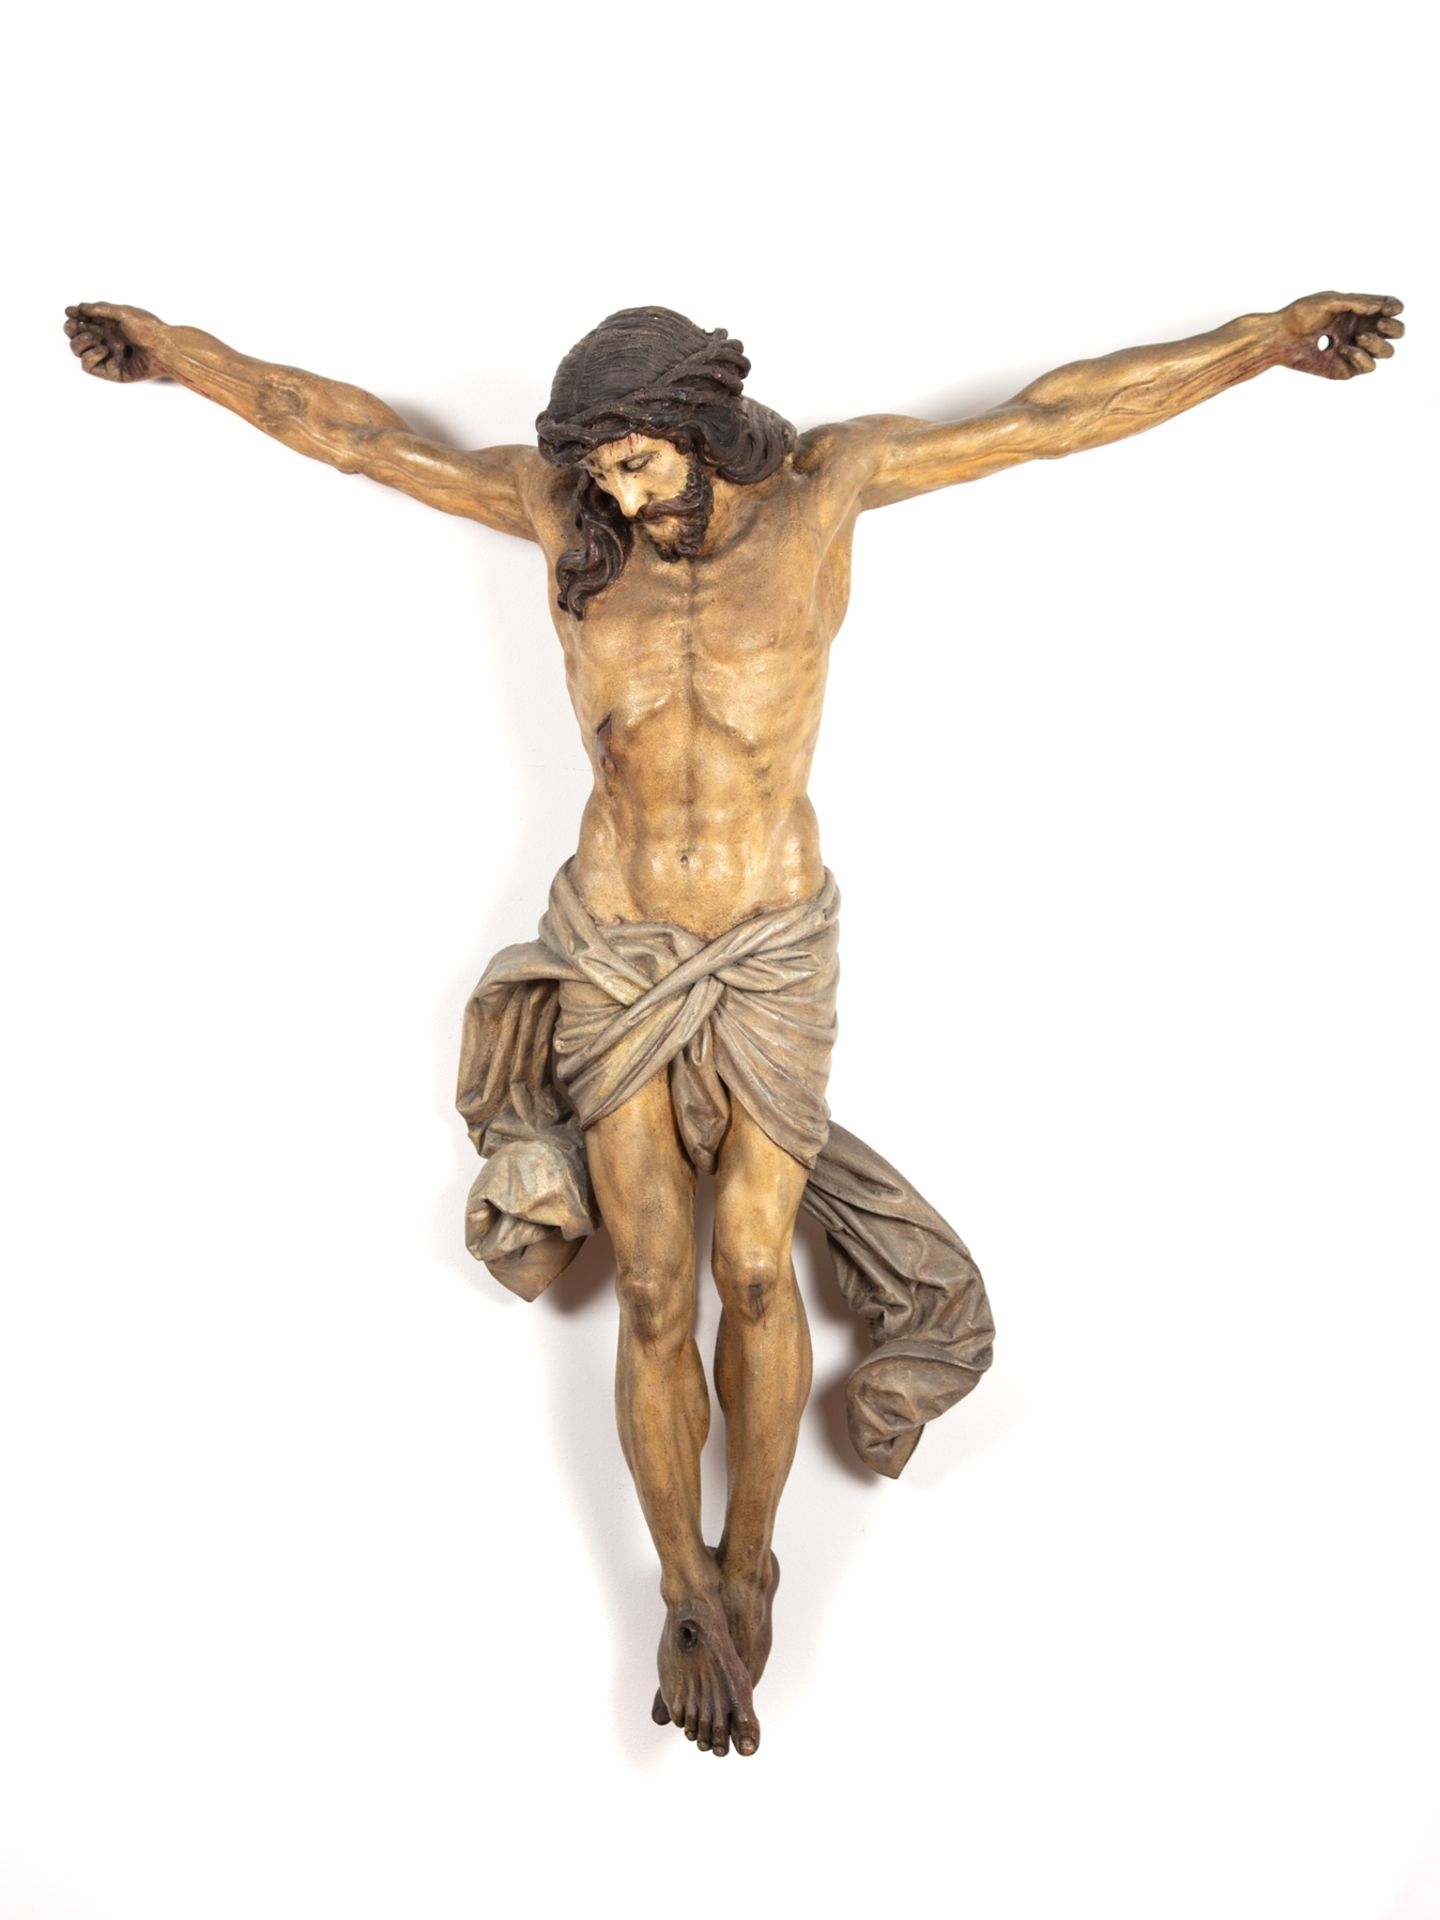 Wood carving Jesus figure in imposing large format around 1880